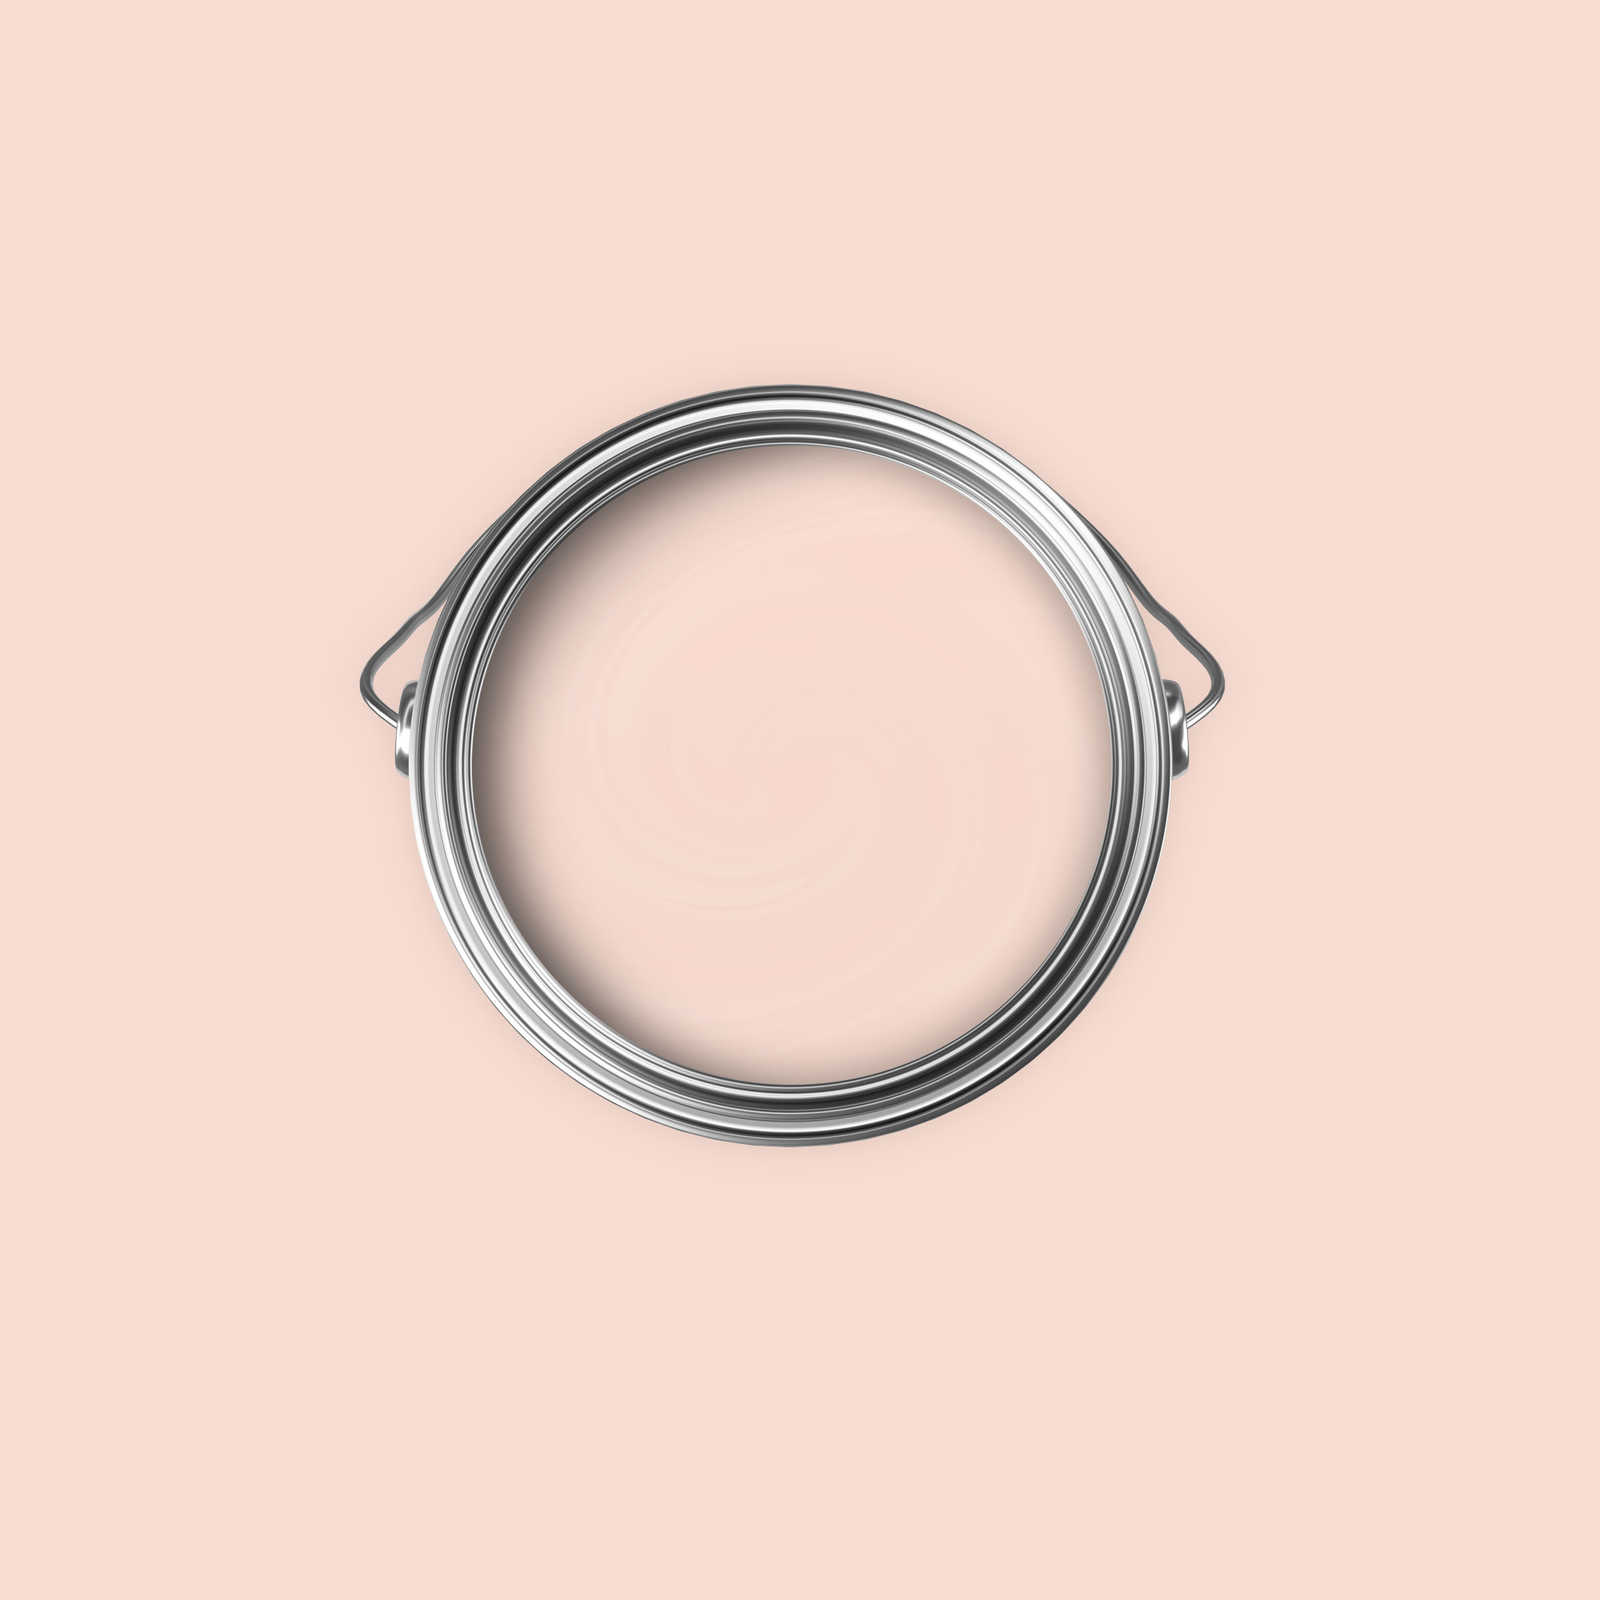             Premium Muurverf knus roze »Luxury Lipstick« NW1000 – 2,5 liter
        